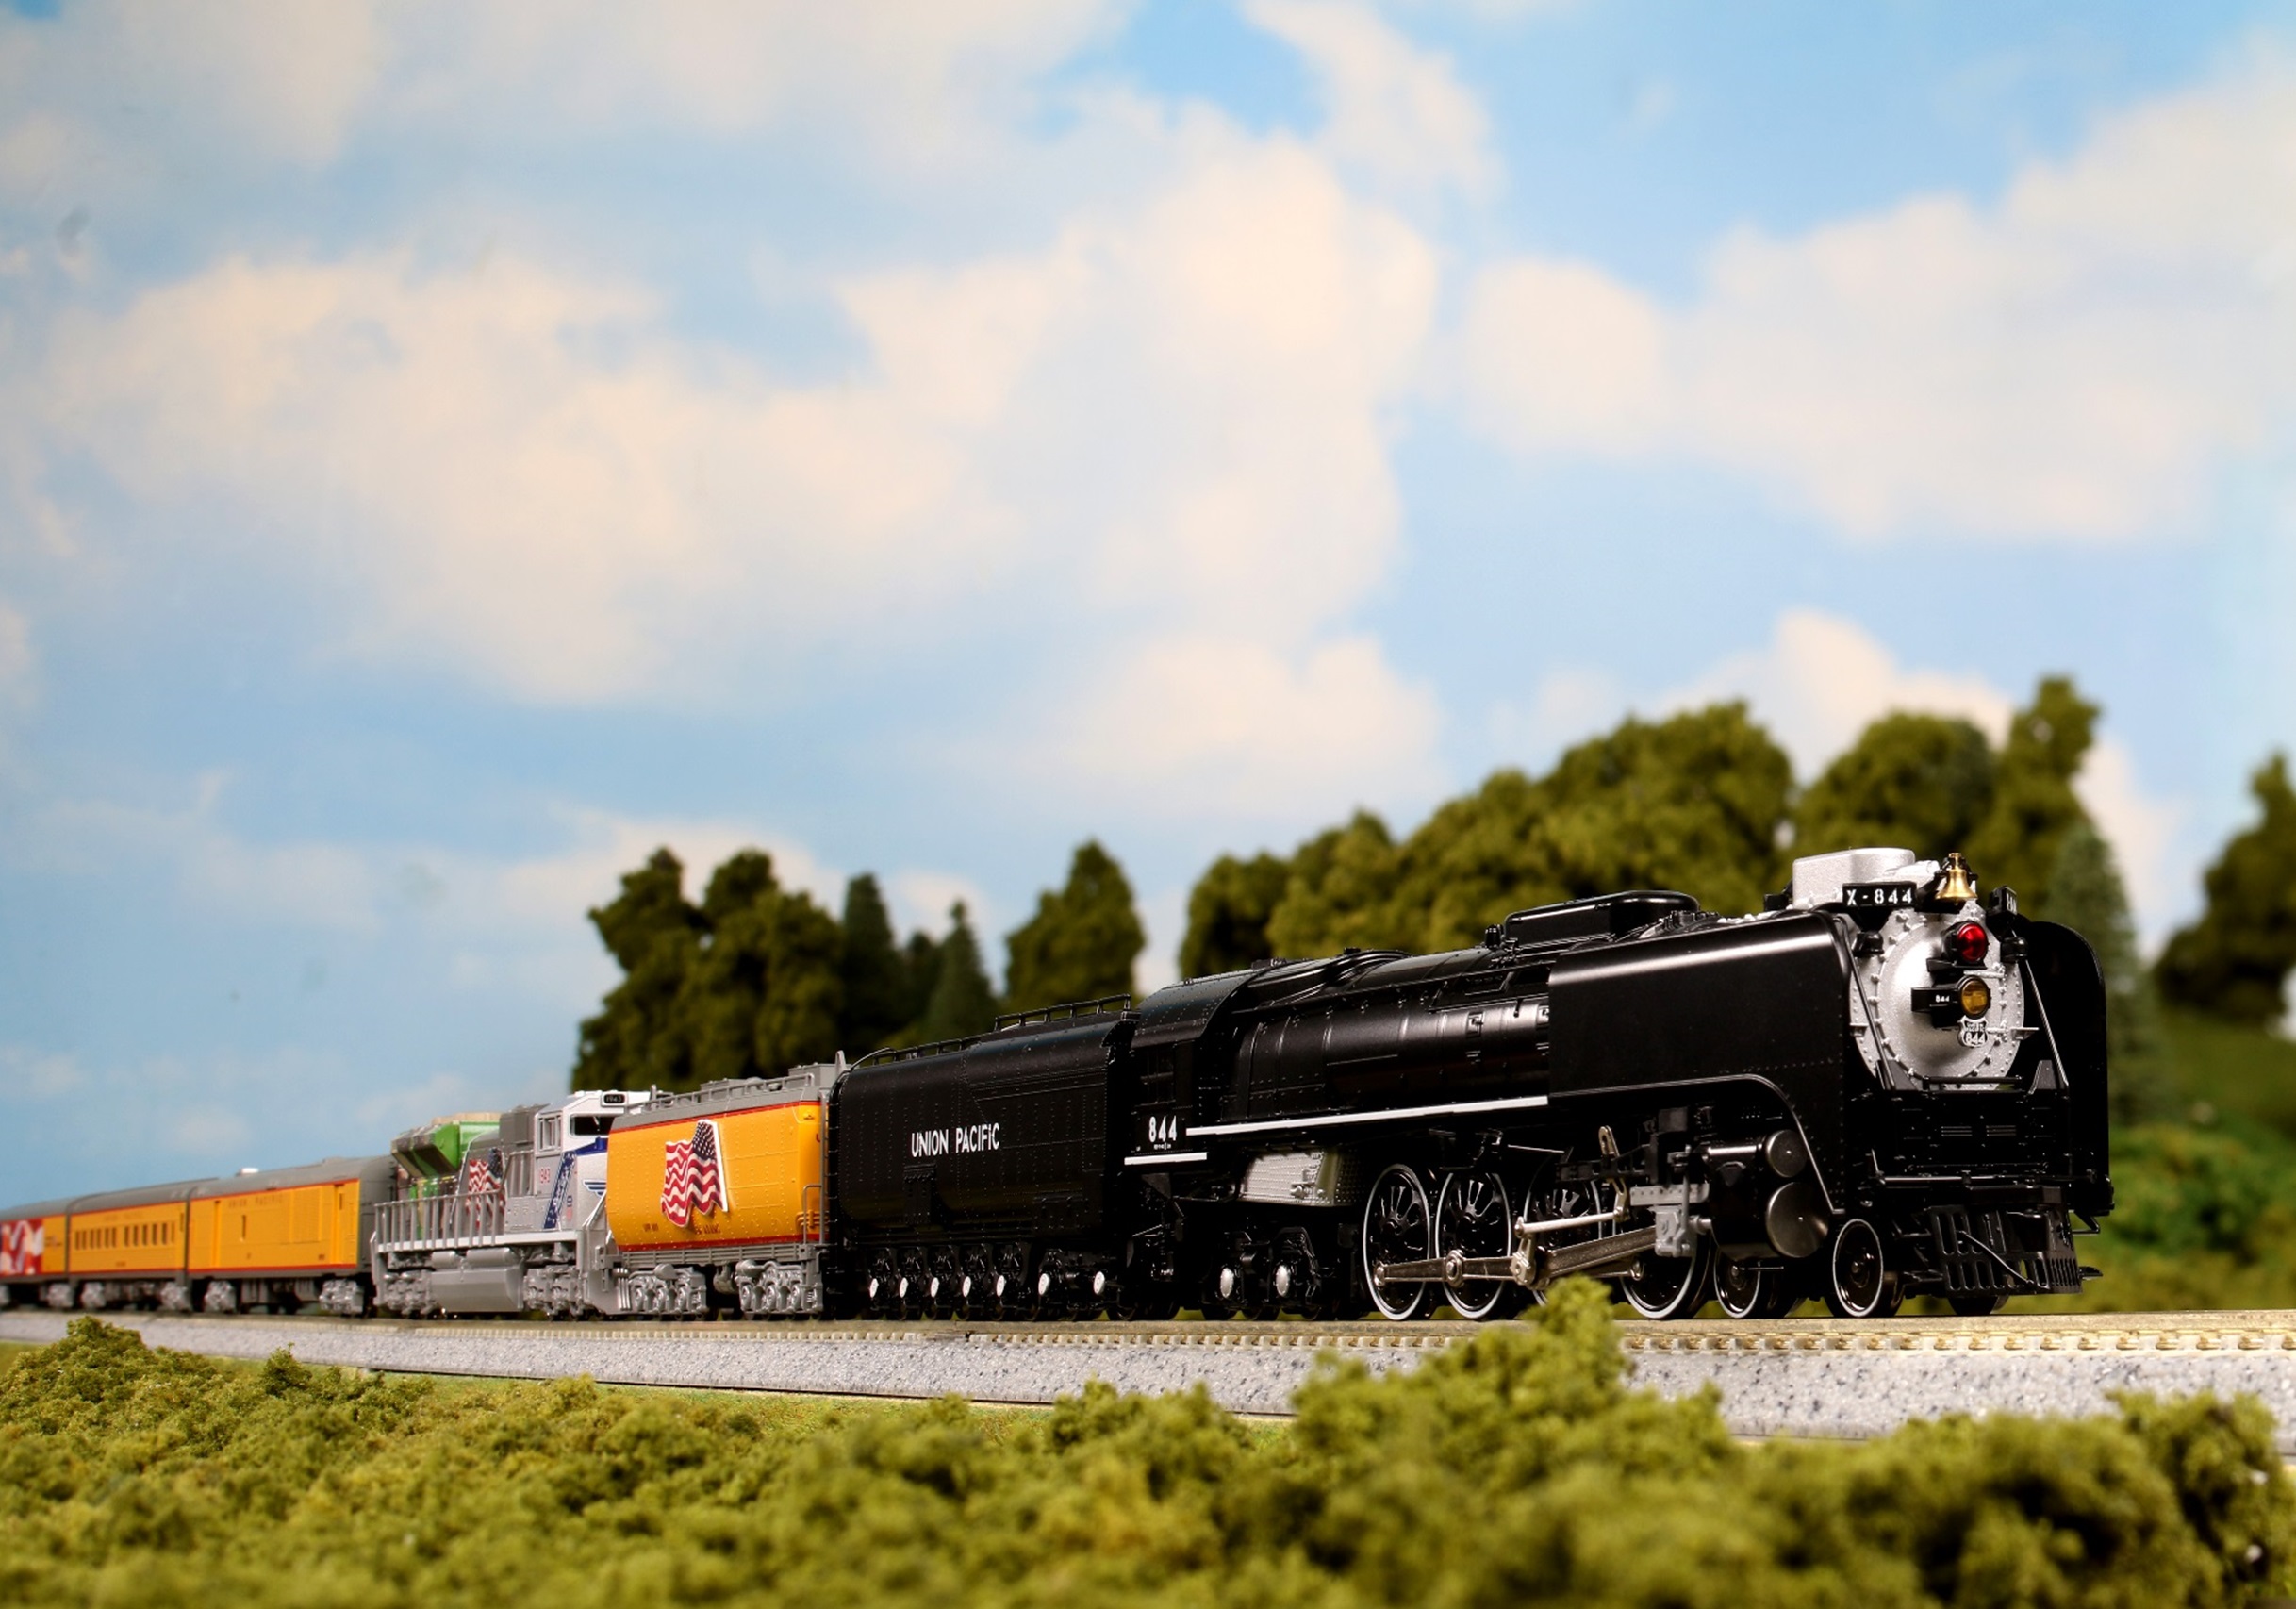 Nゲージ KATO 12605-2 UP FEF-3蒸気機関車 #844 黒 | 鉄道模型 通販